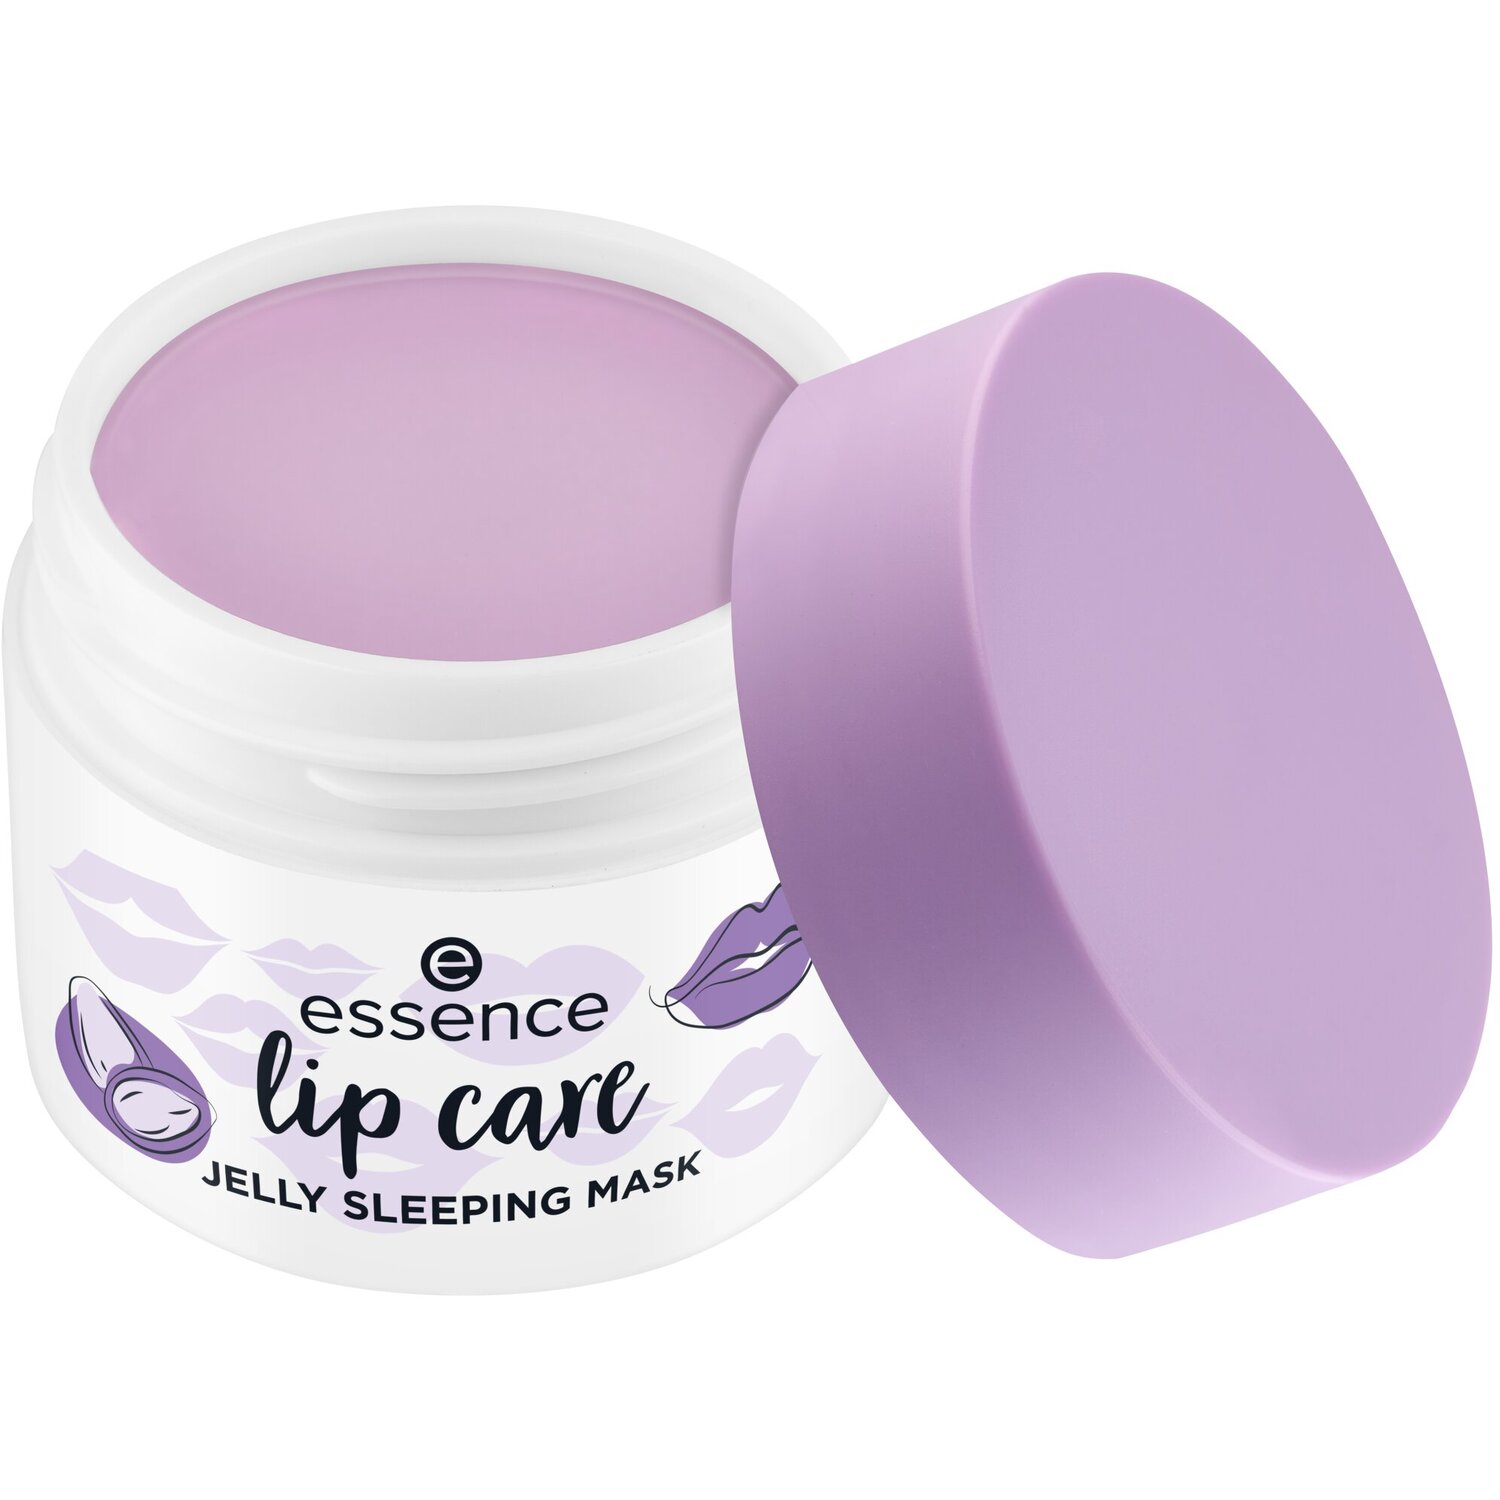 essence Lip Care Jelly Sleeping Mask - Purple Image